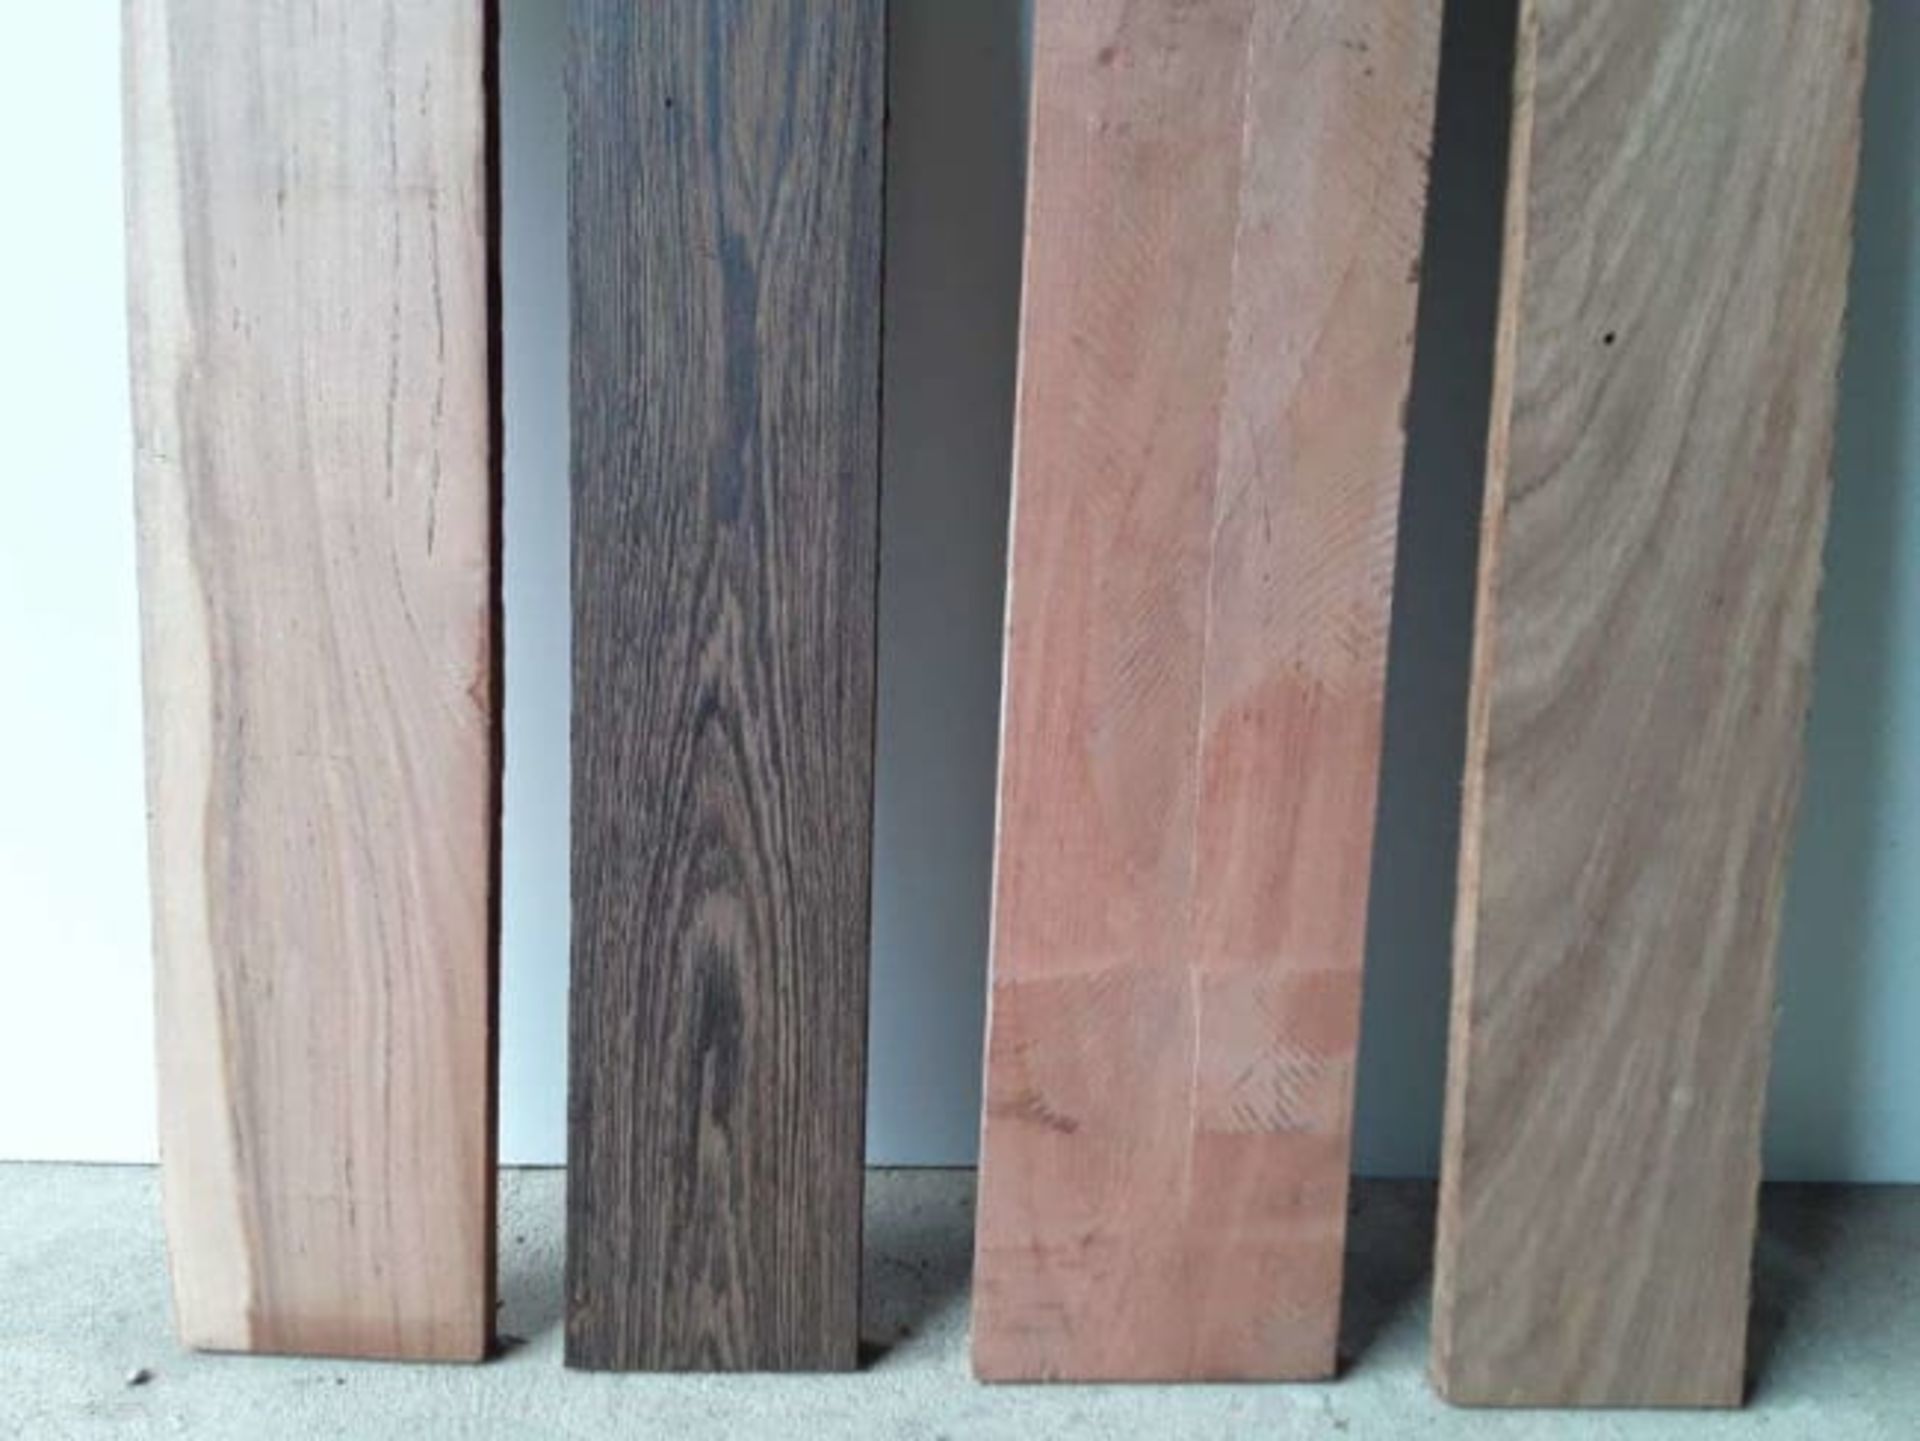 4 x Hardwood Kiln Dried Tropical African Mixed Timbers Rosewood, Panga Panga, Wild Mango, Kiaat - Image 3 of 3